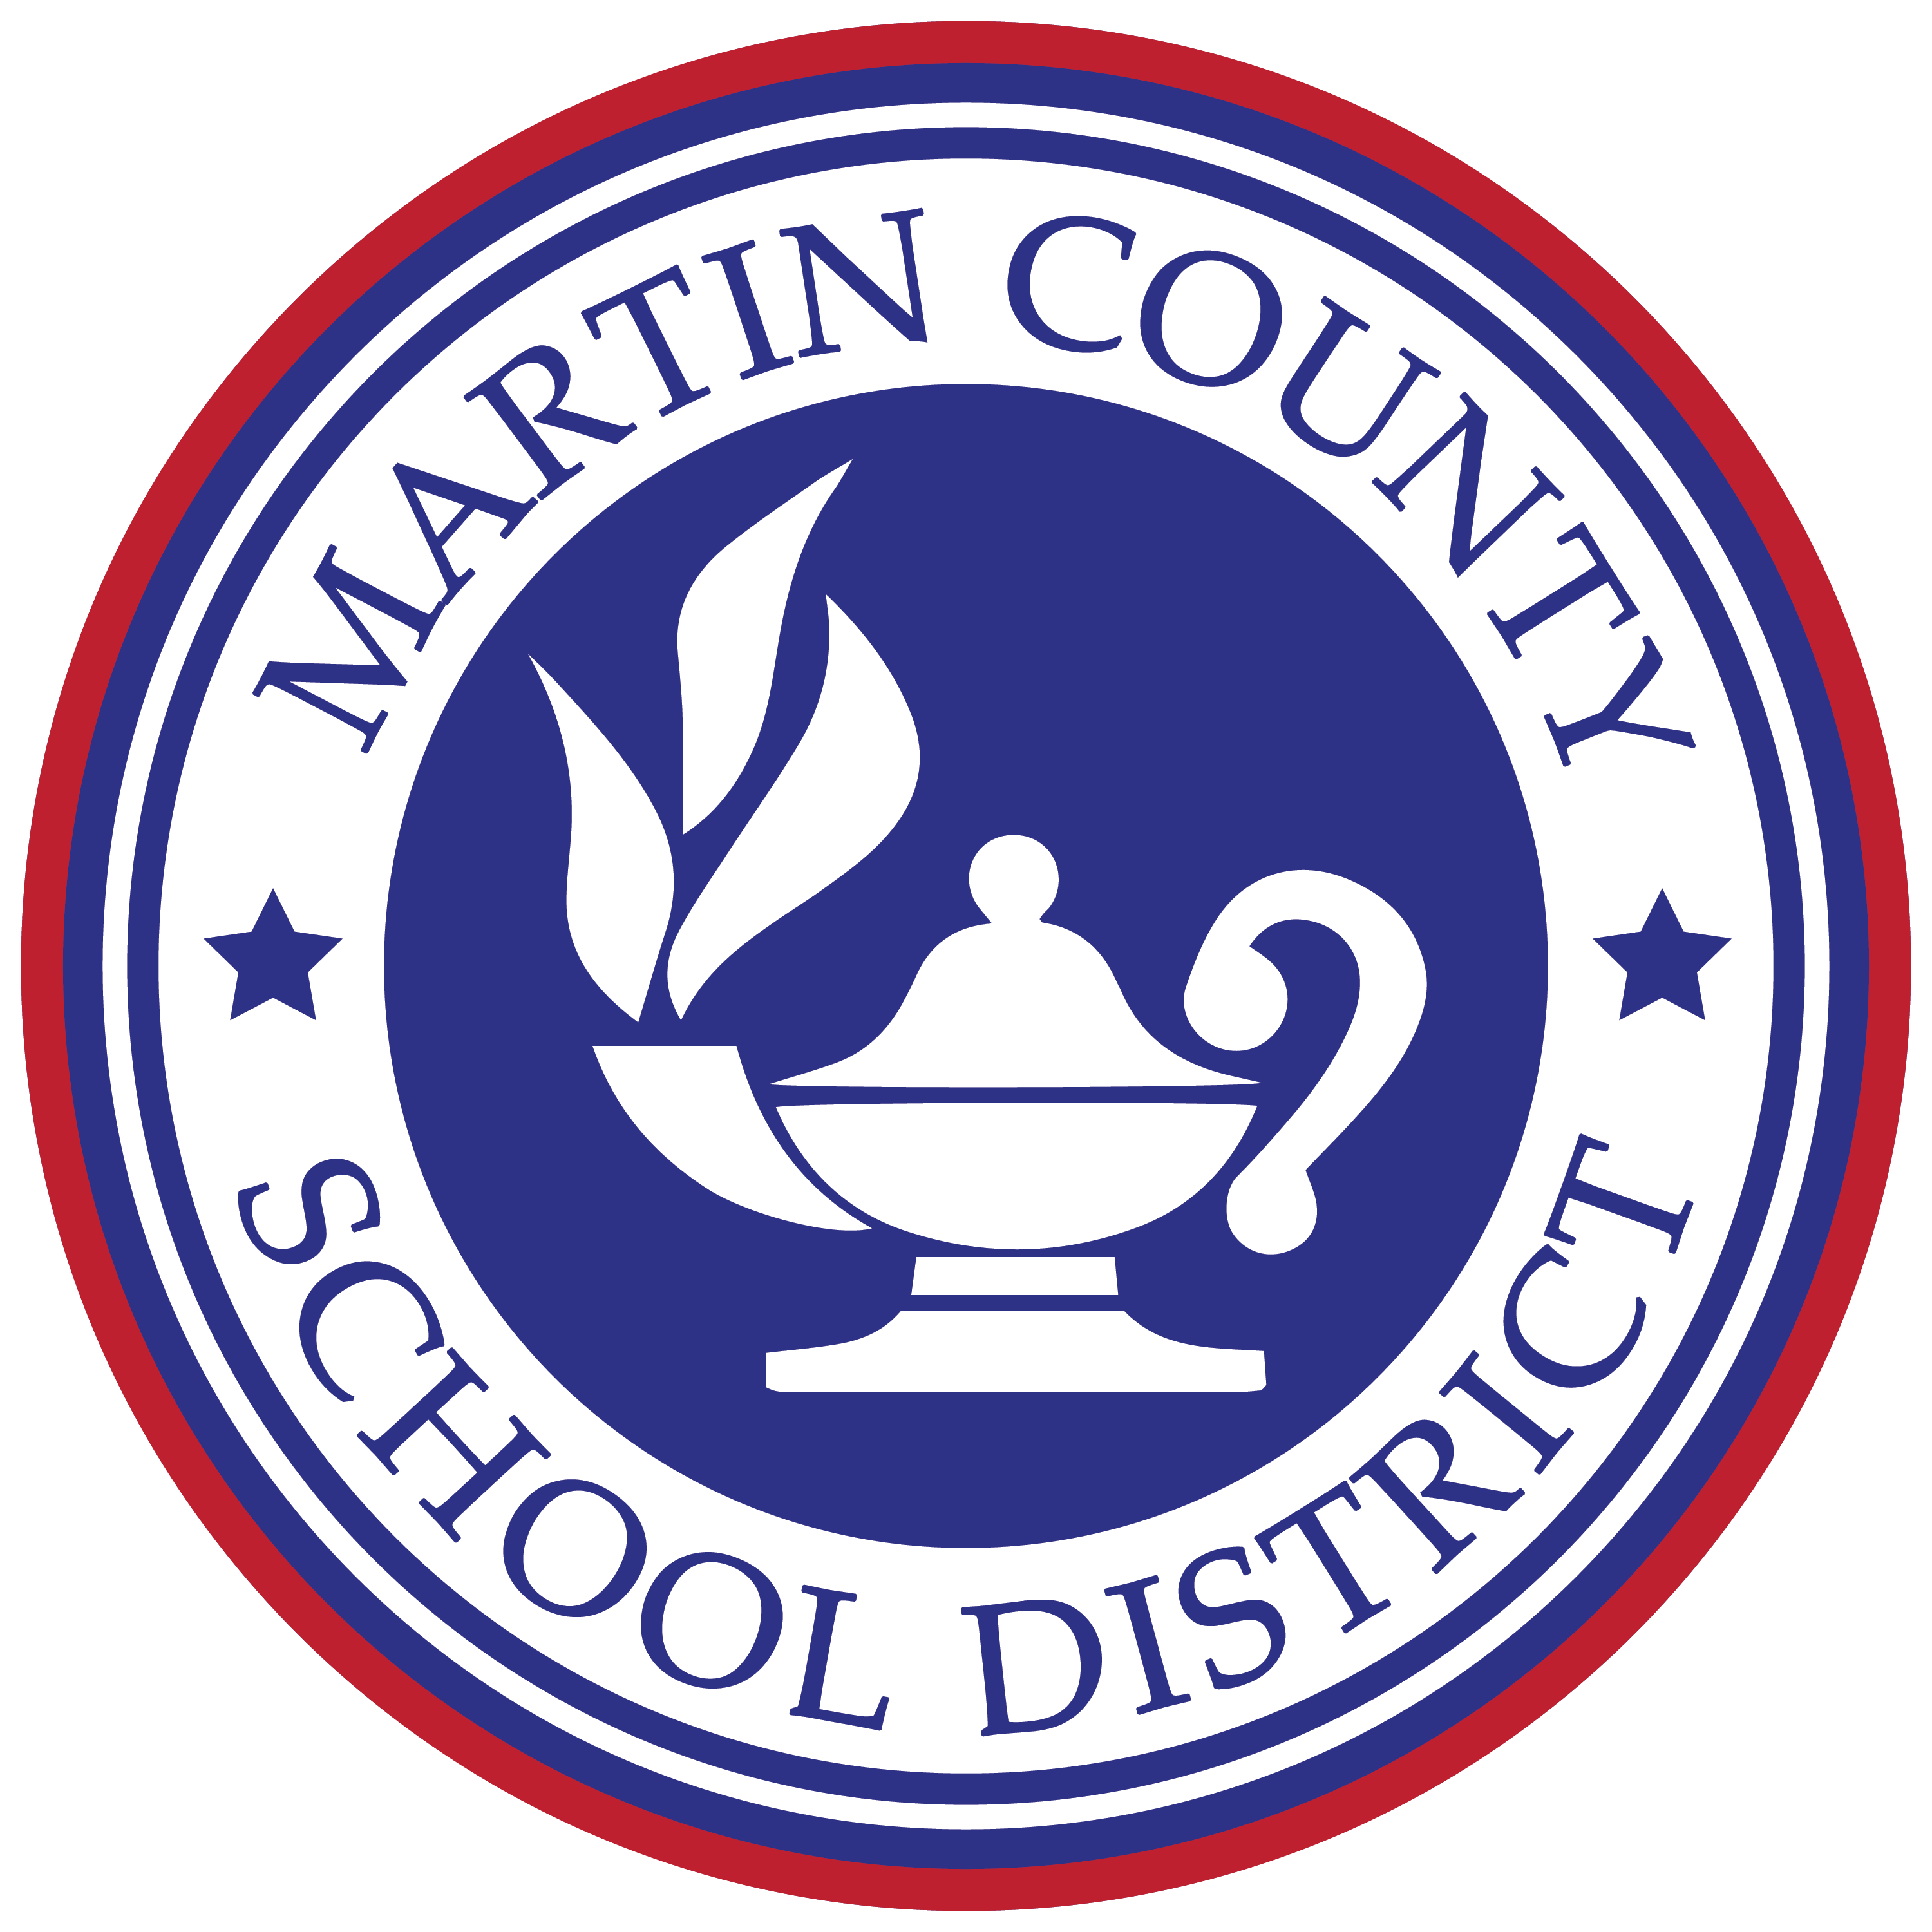 calendars-martin-county-school-district